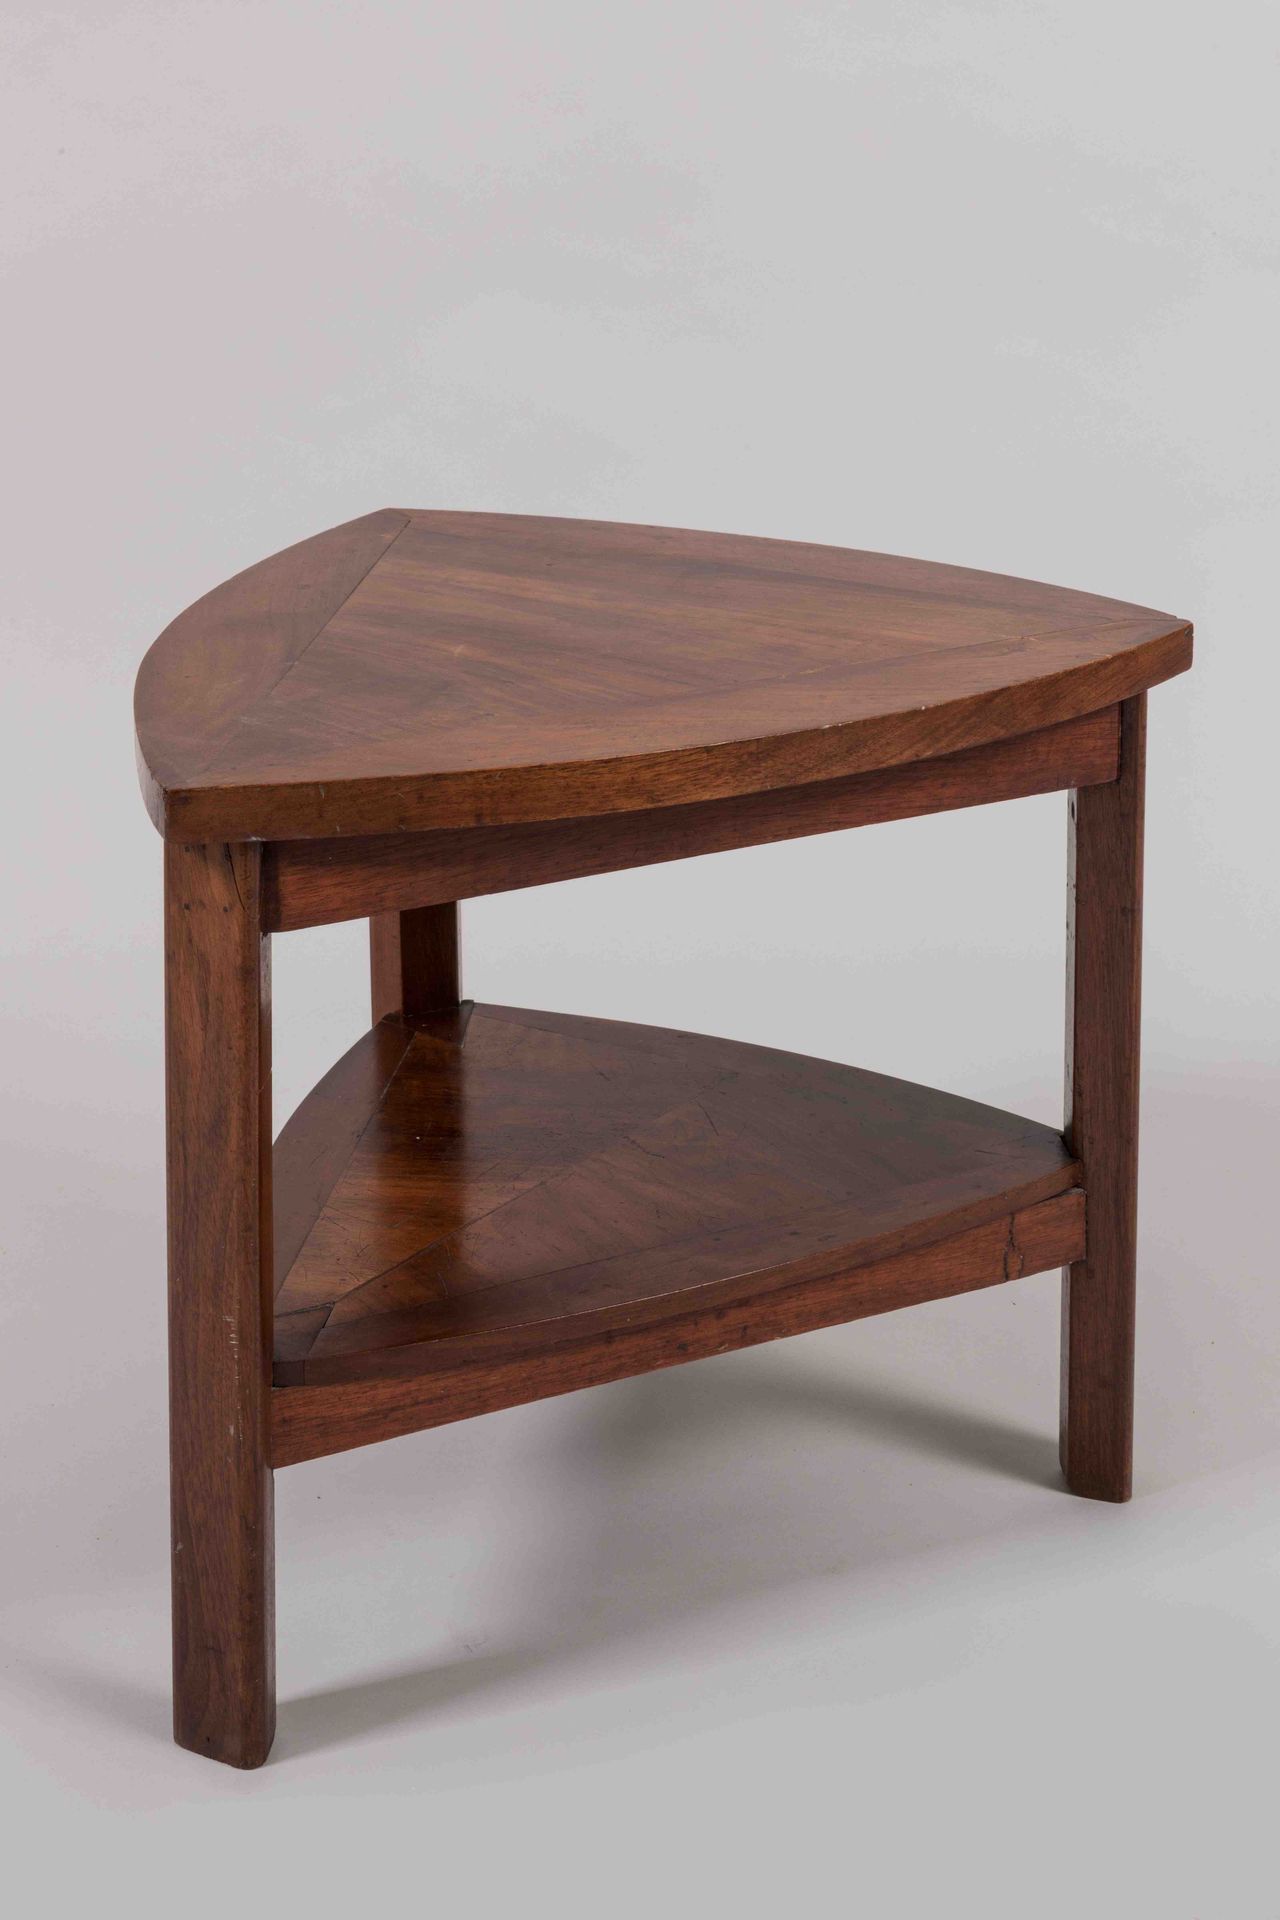 Null 三角形胡桃木饰面的VOLANTE桌。三脚架底座由一个间隔架连接。

装饰艺术风格。

高度：43厘米。宽度：43厘米。深度：46厘米。(小事故)。